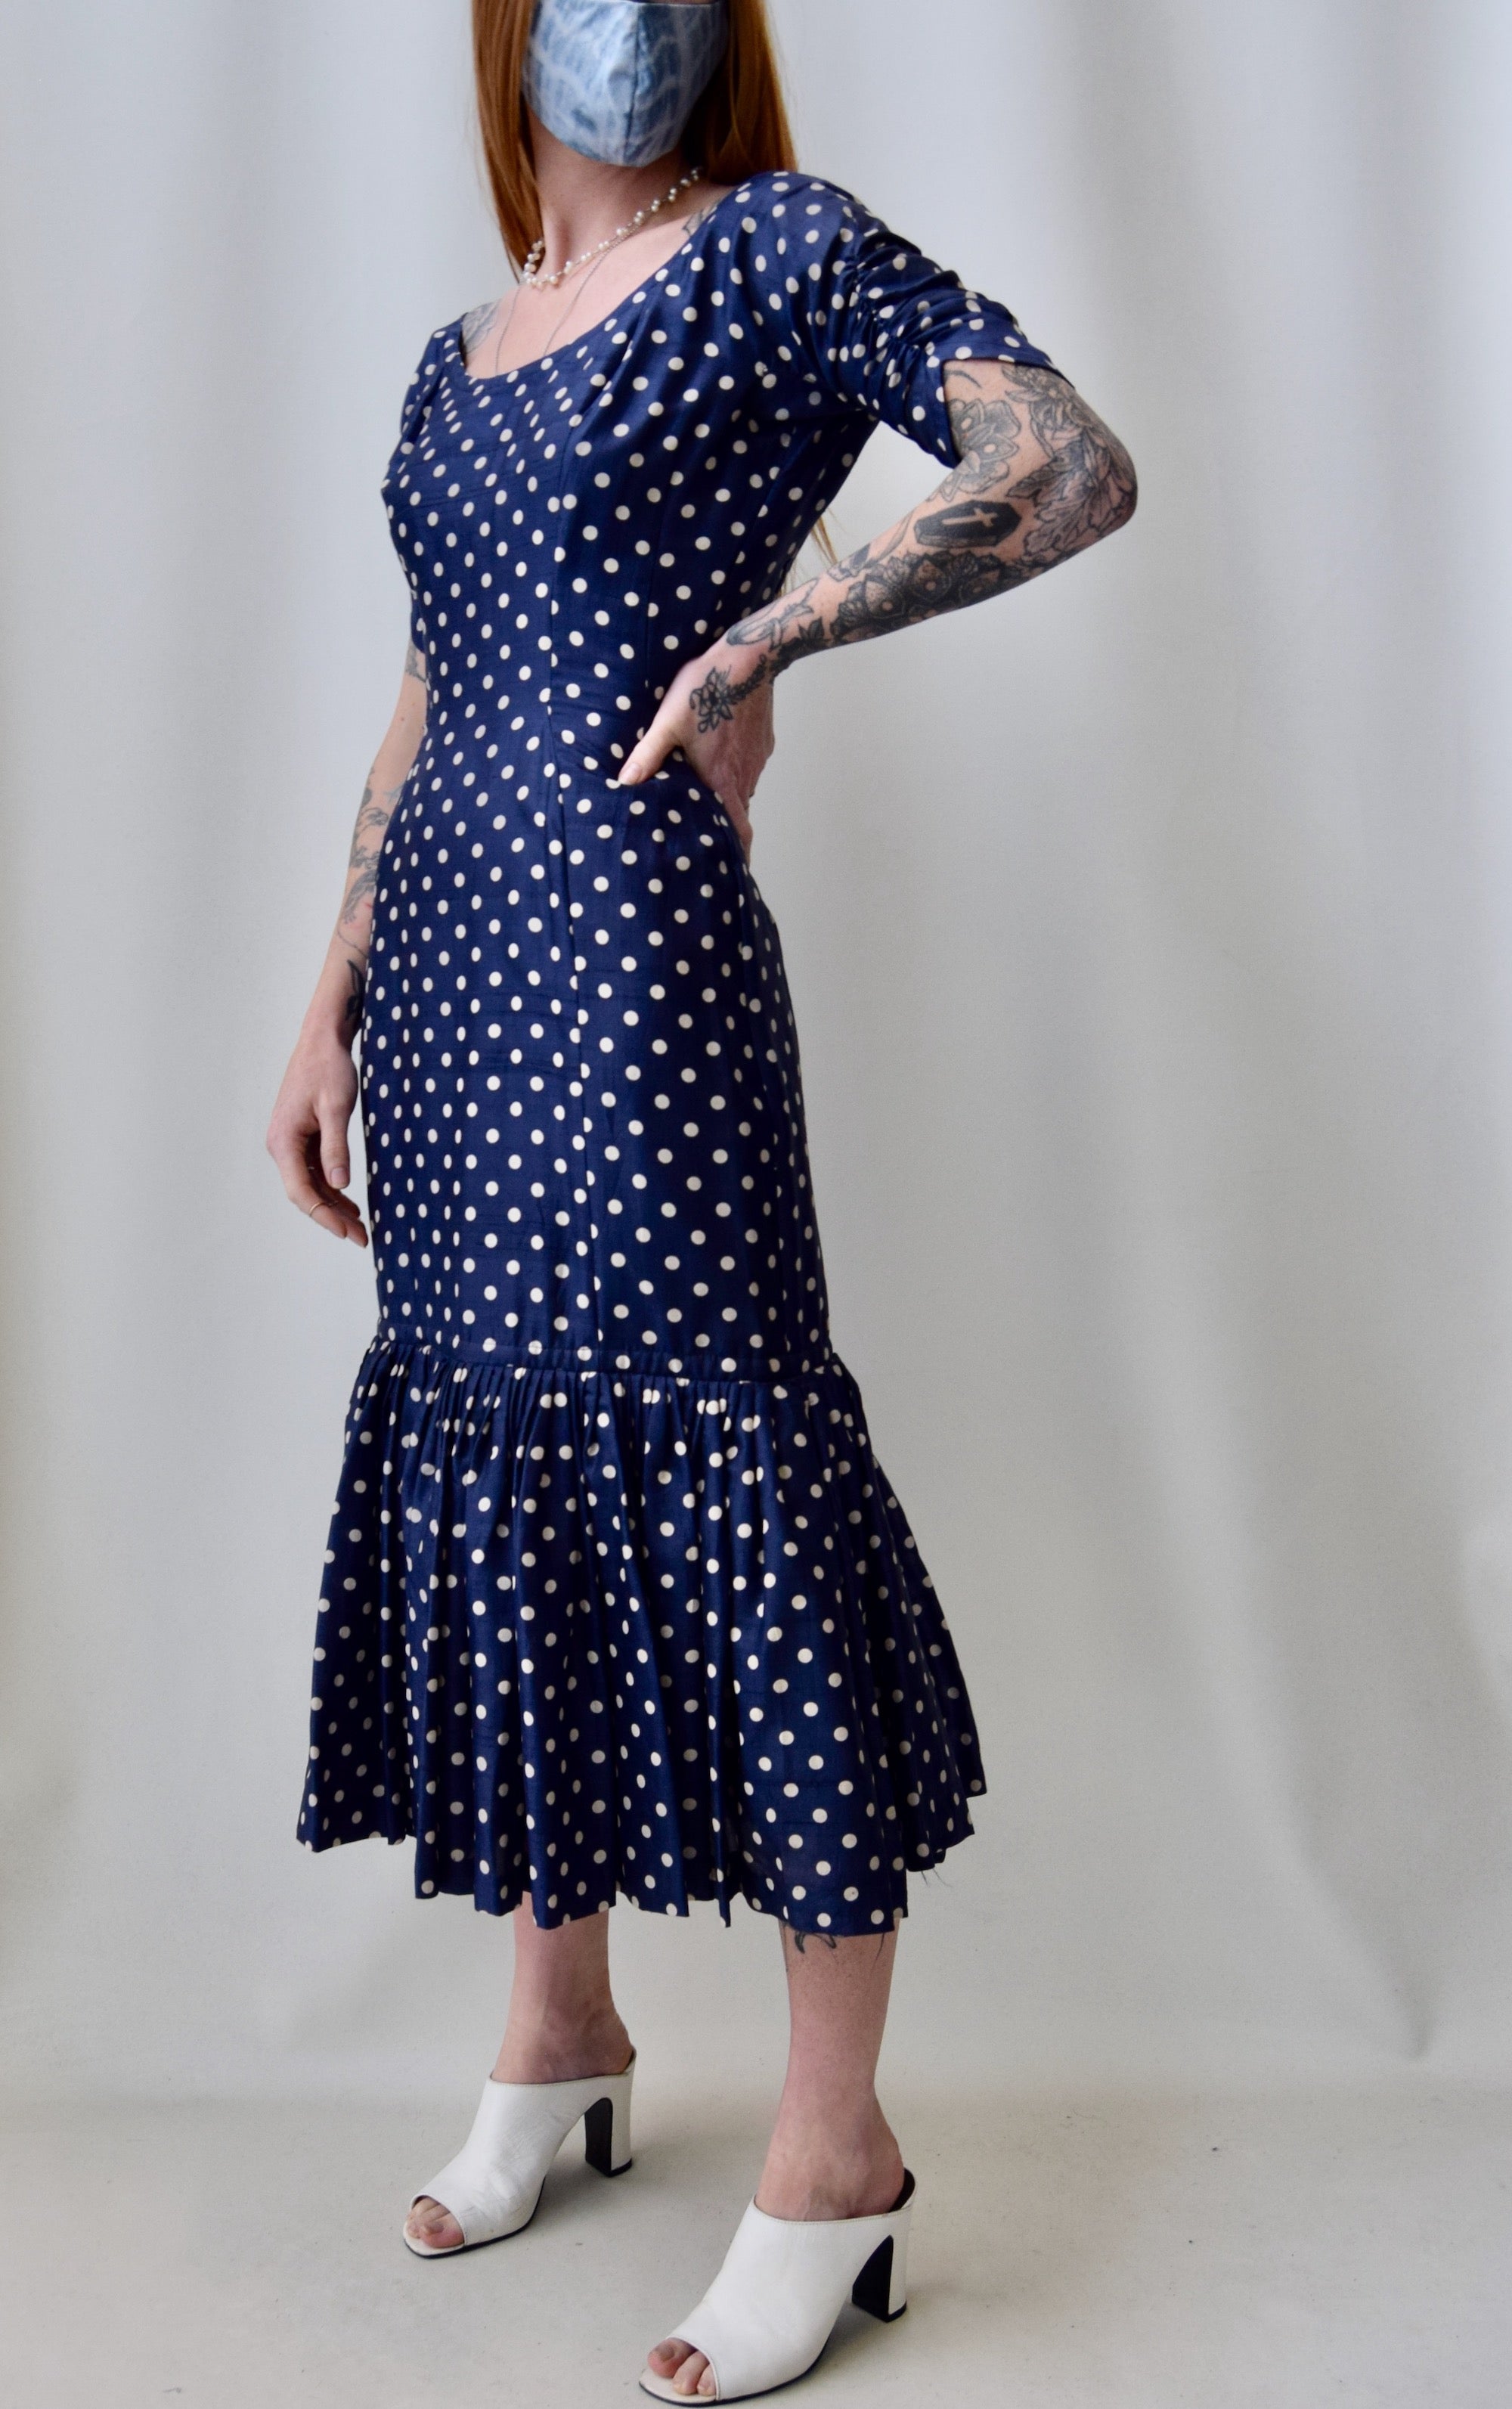 Vintage Silk Polka Dot Dress